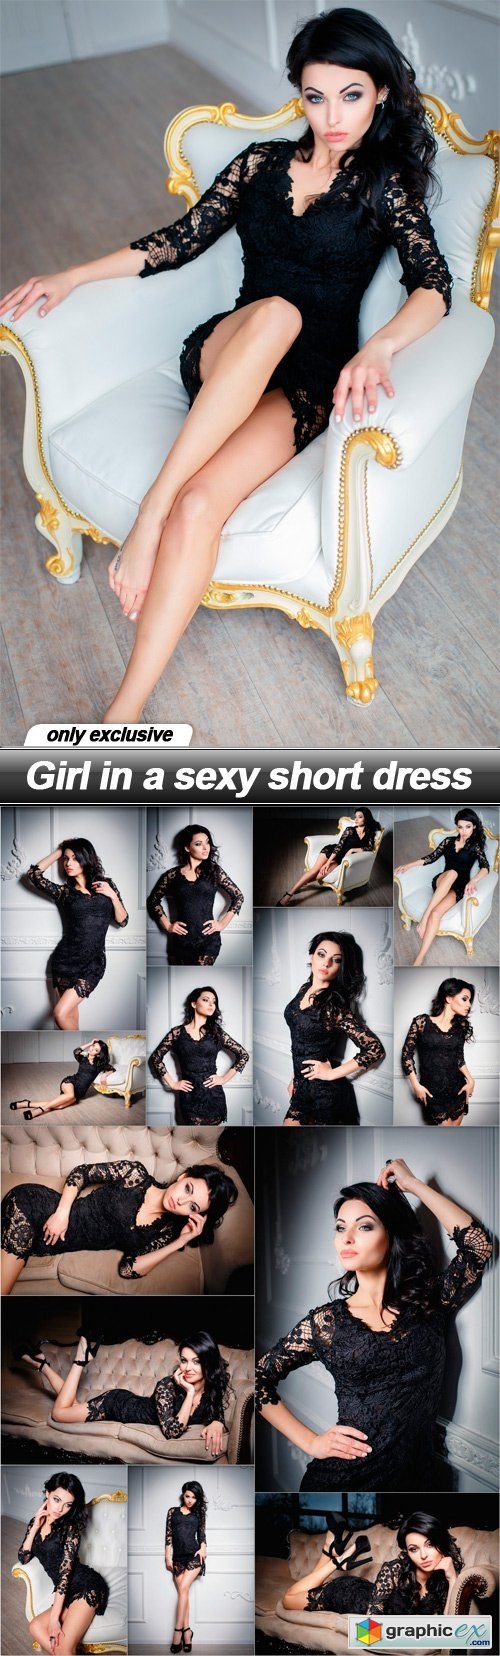 Girl in a sexy short dress - 14 UHQ JPEG